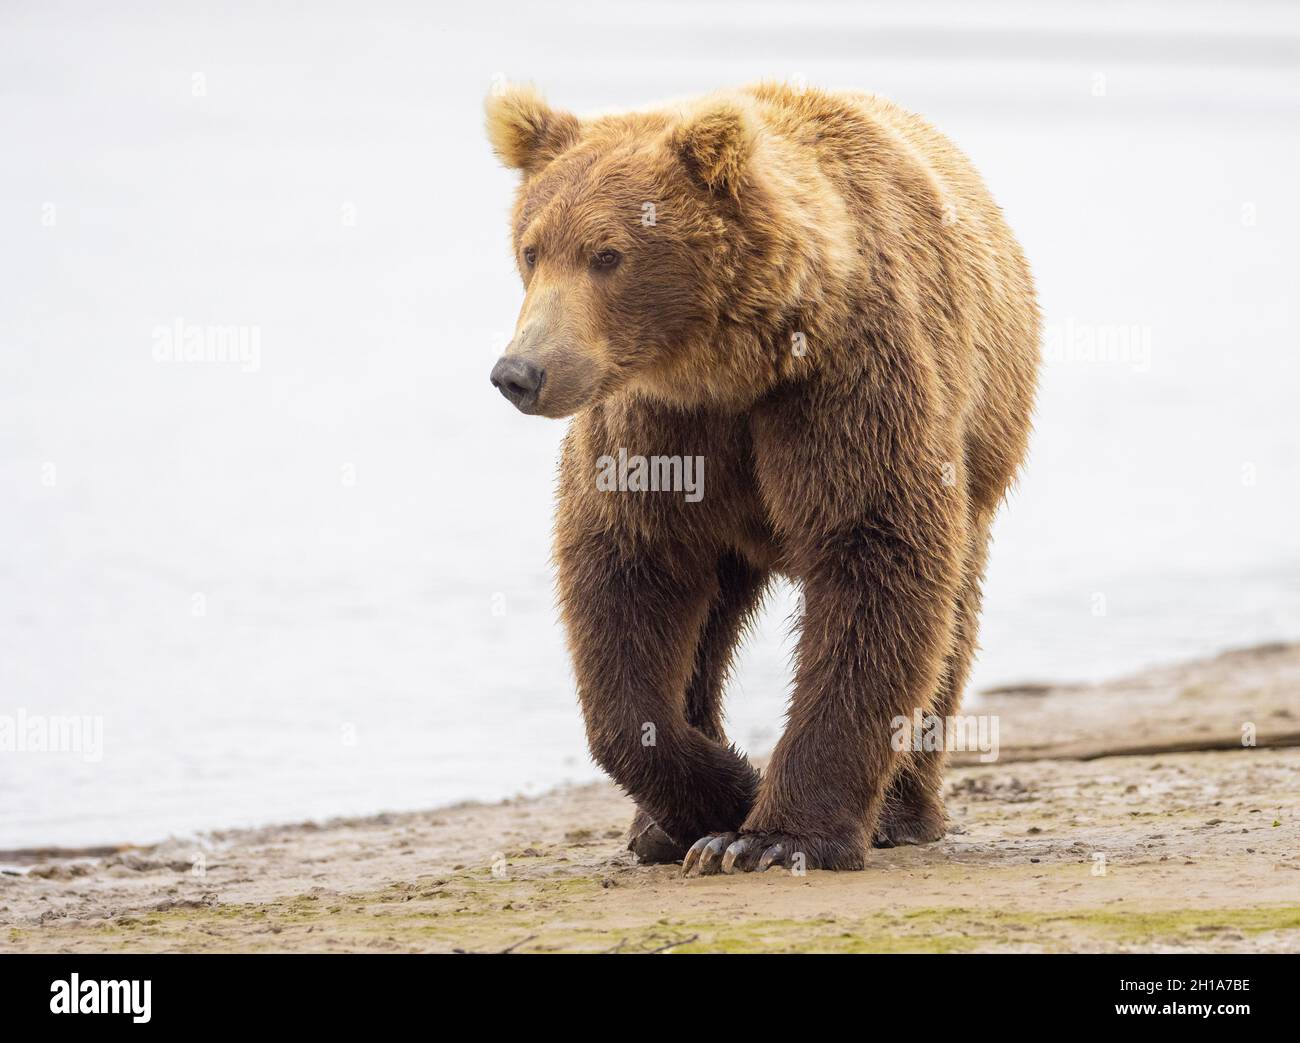 A Brown or Grizzly Bear, Katmai National Park, Hallo Bay, Alaska. Stock Photo